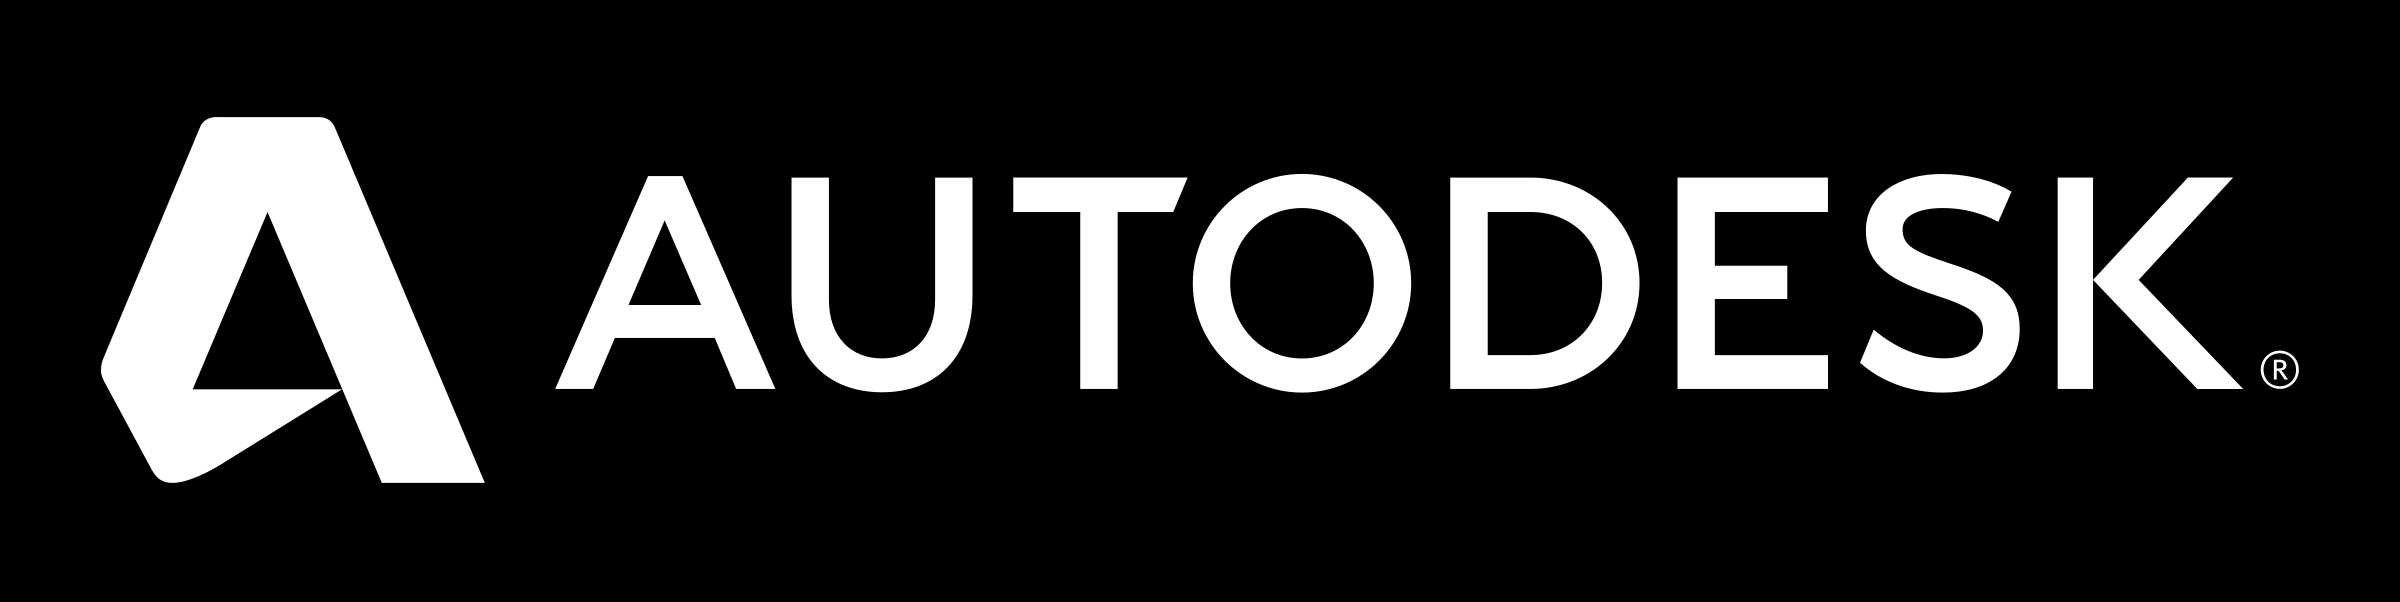 Autodesk Logo - Autodesk Logo PNG Transparent & SVG Vector